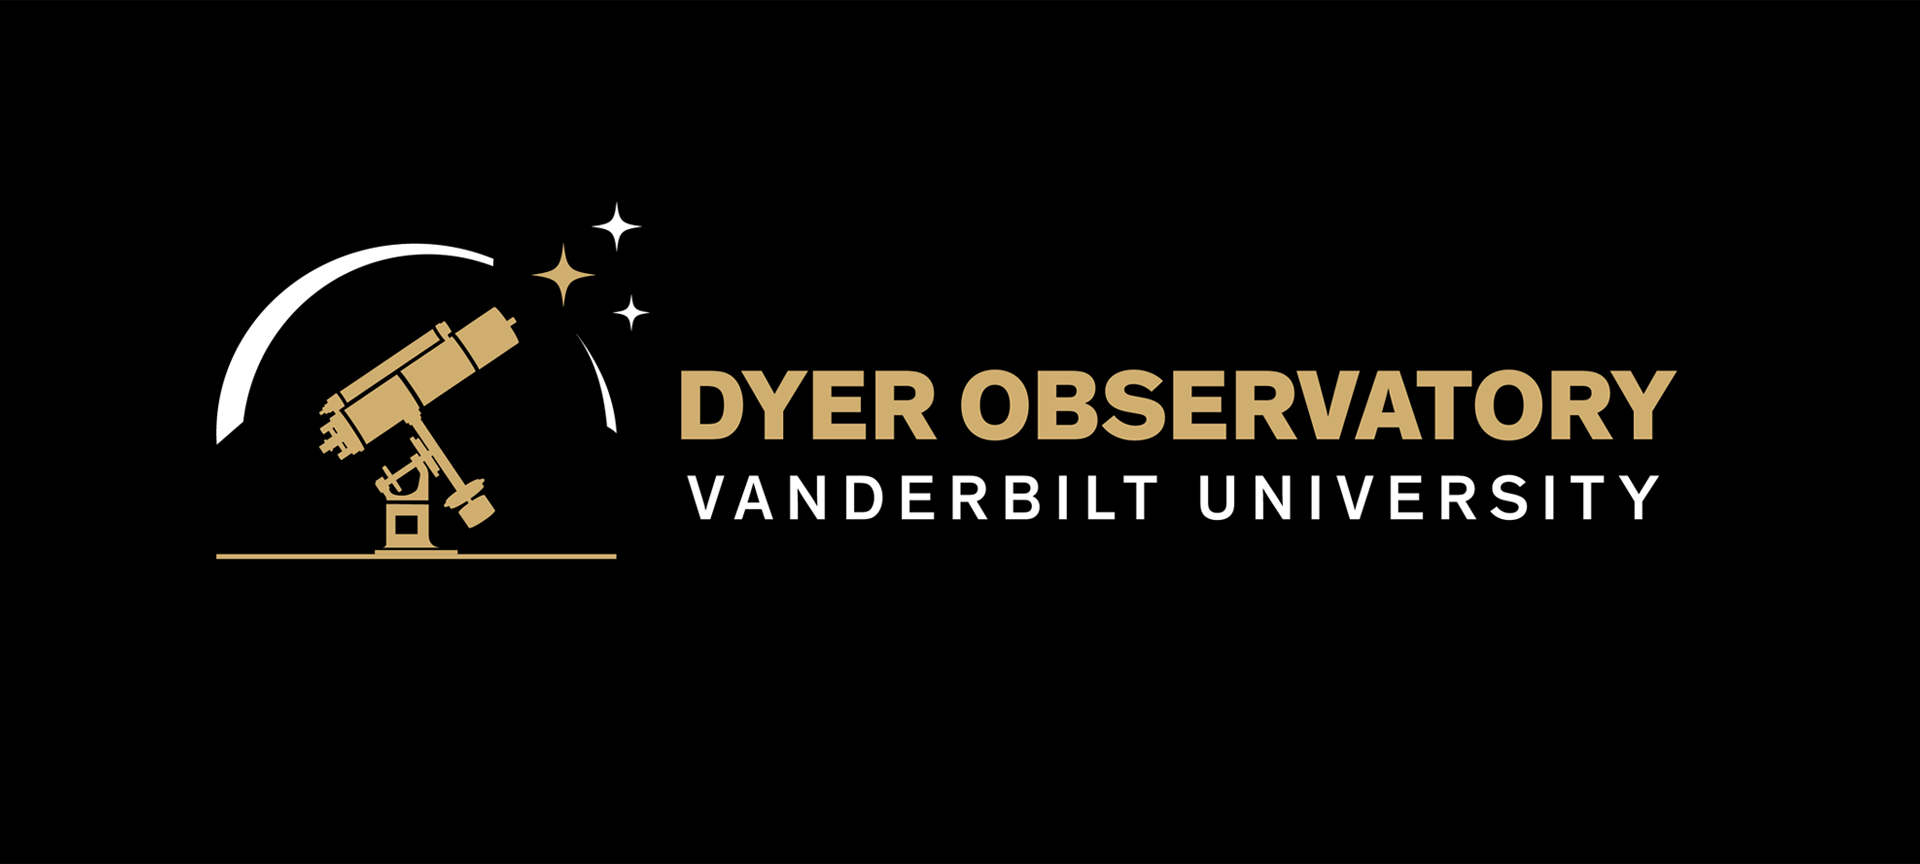 Vanderbilt University Dyer Observatory logo